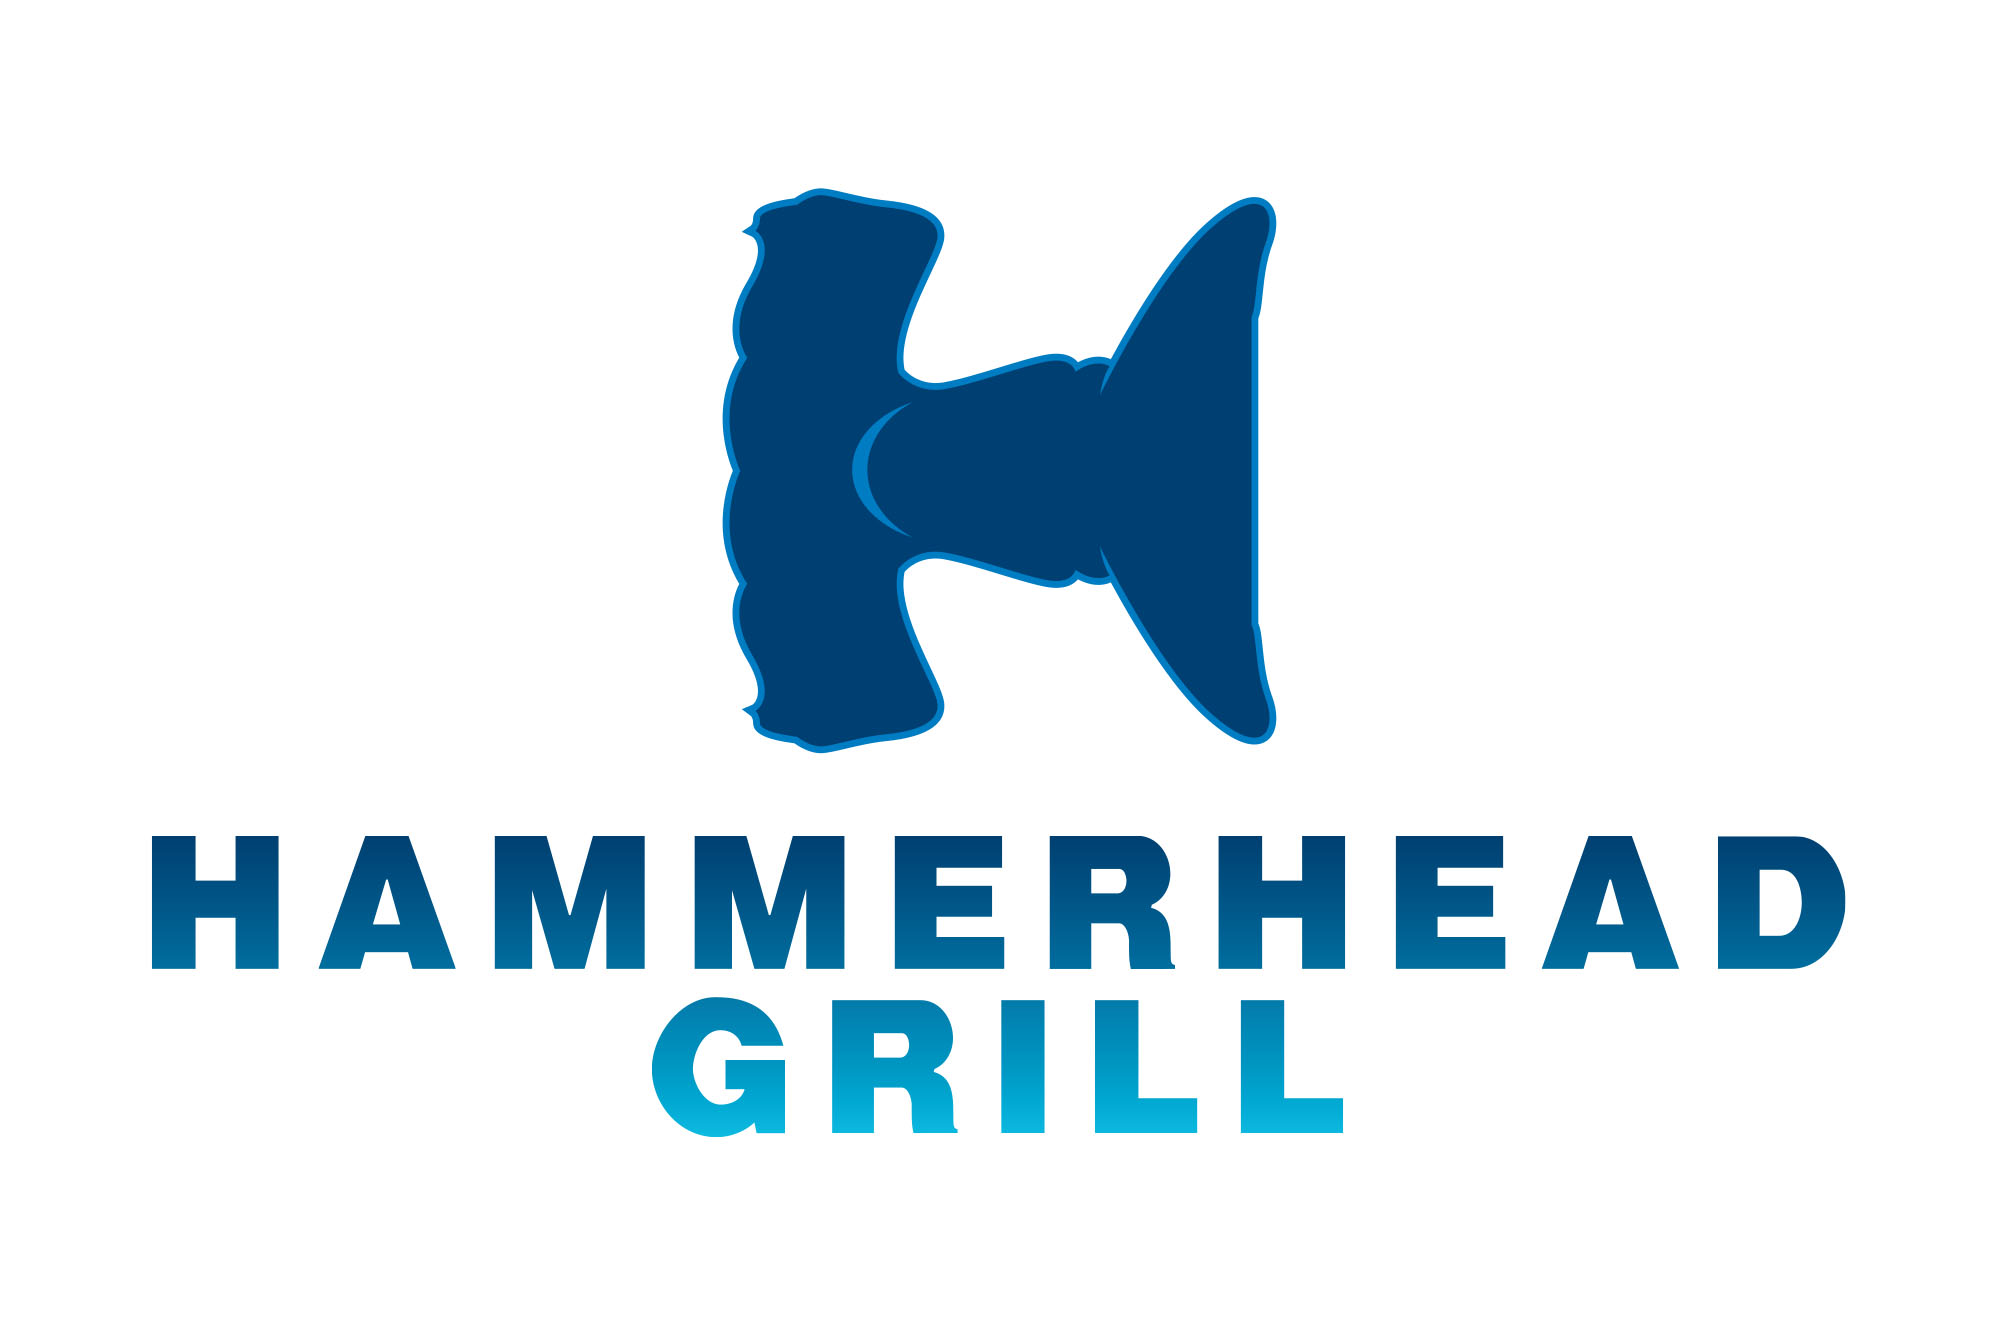 Hammerhead grill logo.jpg